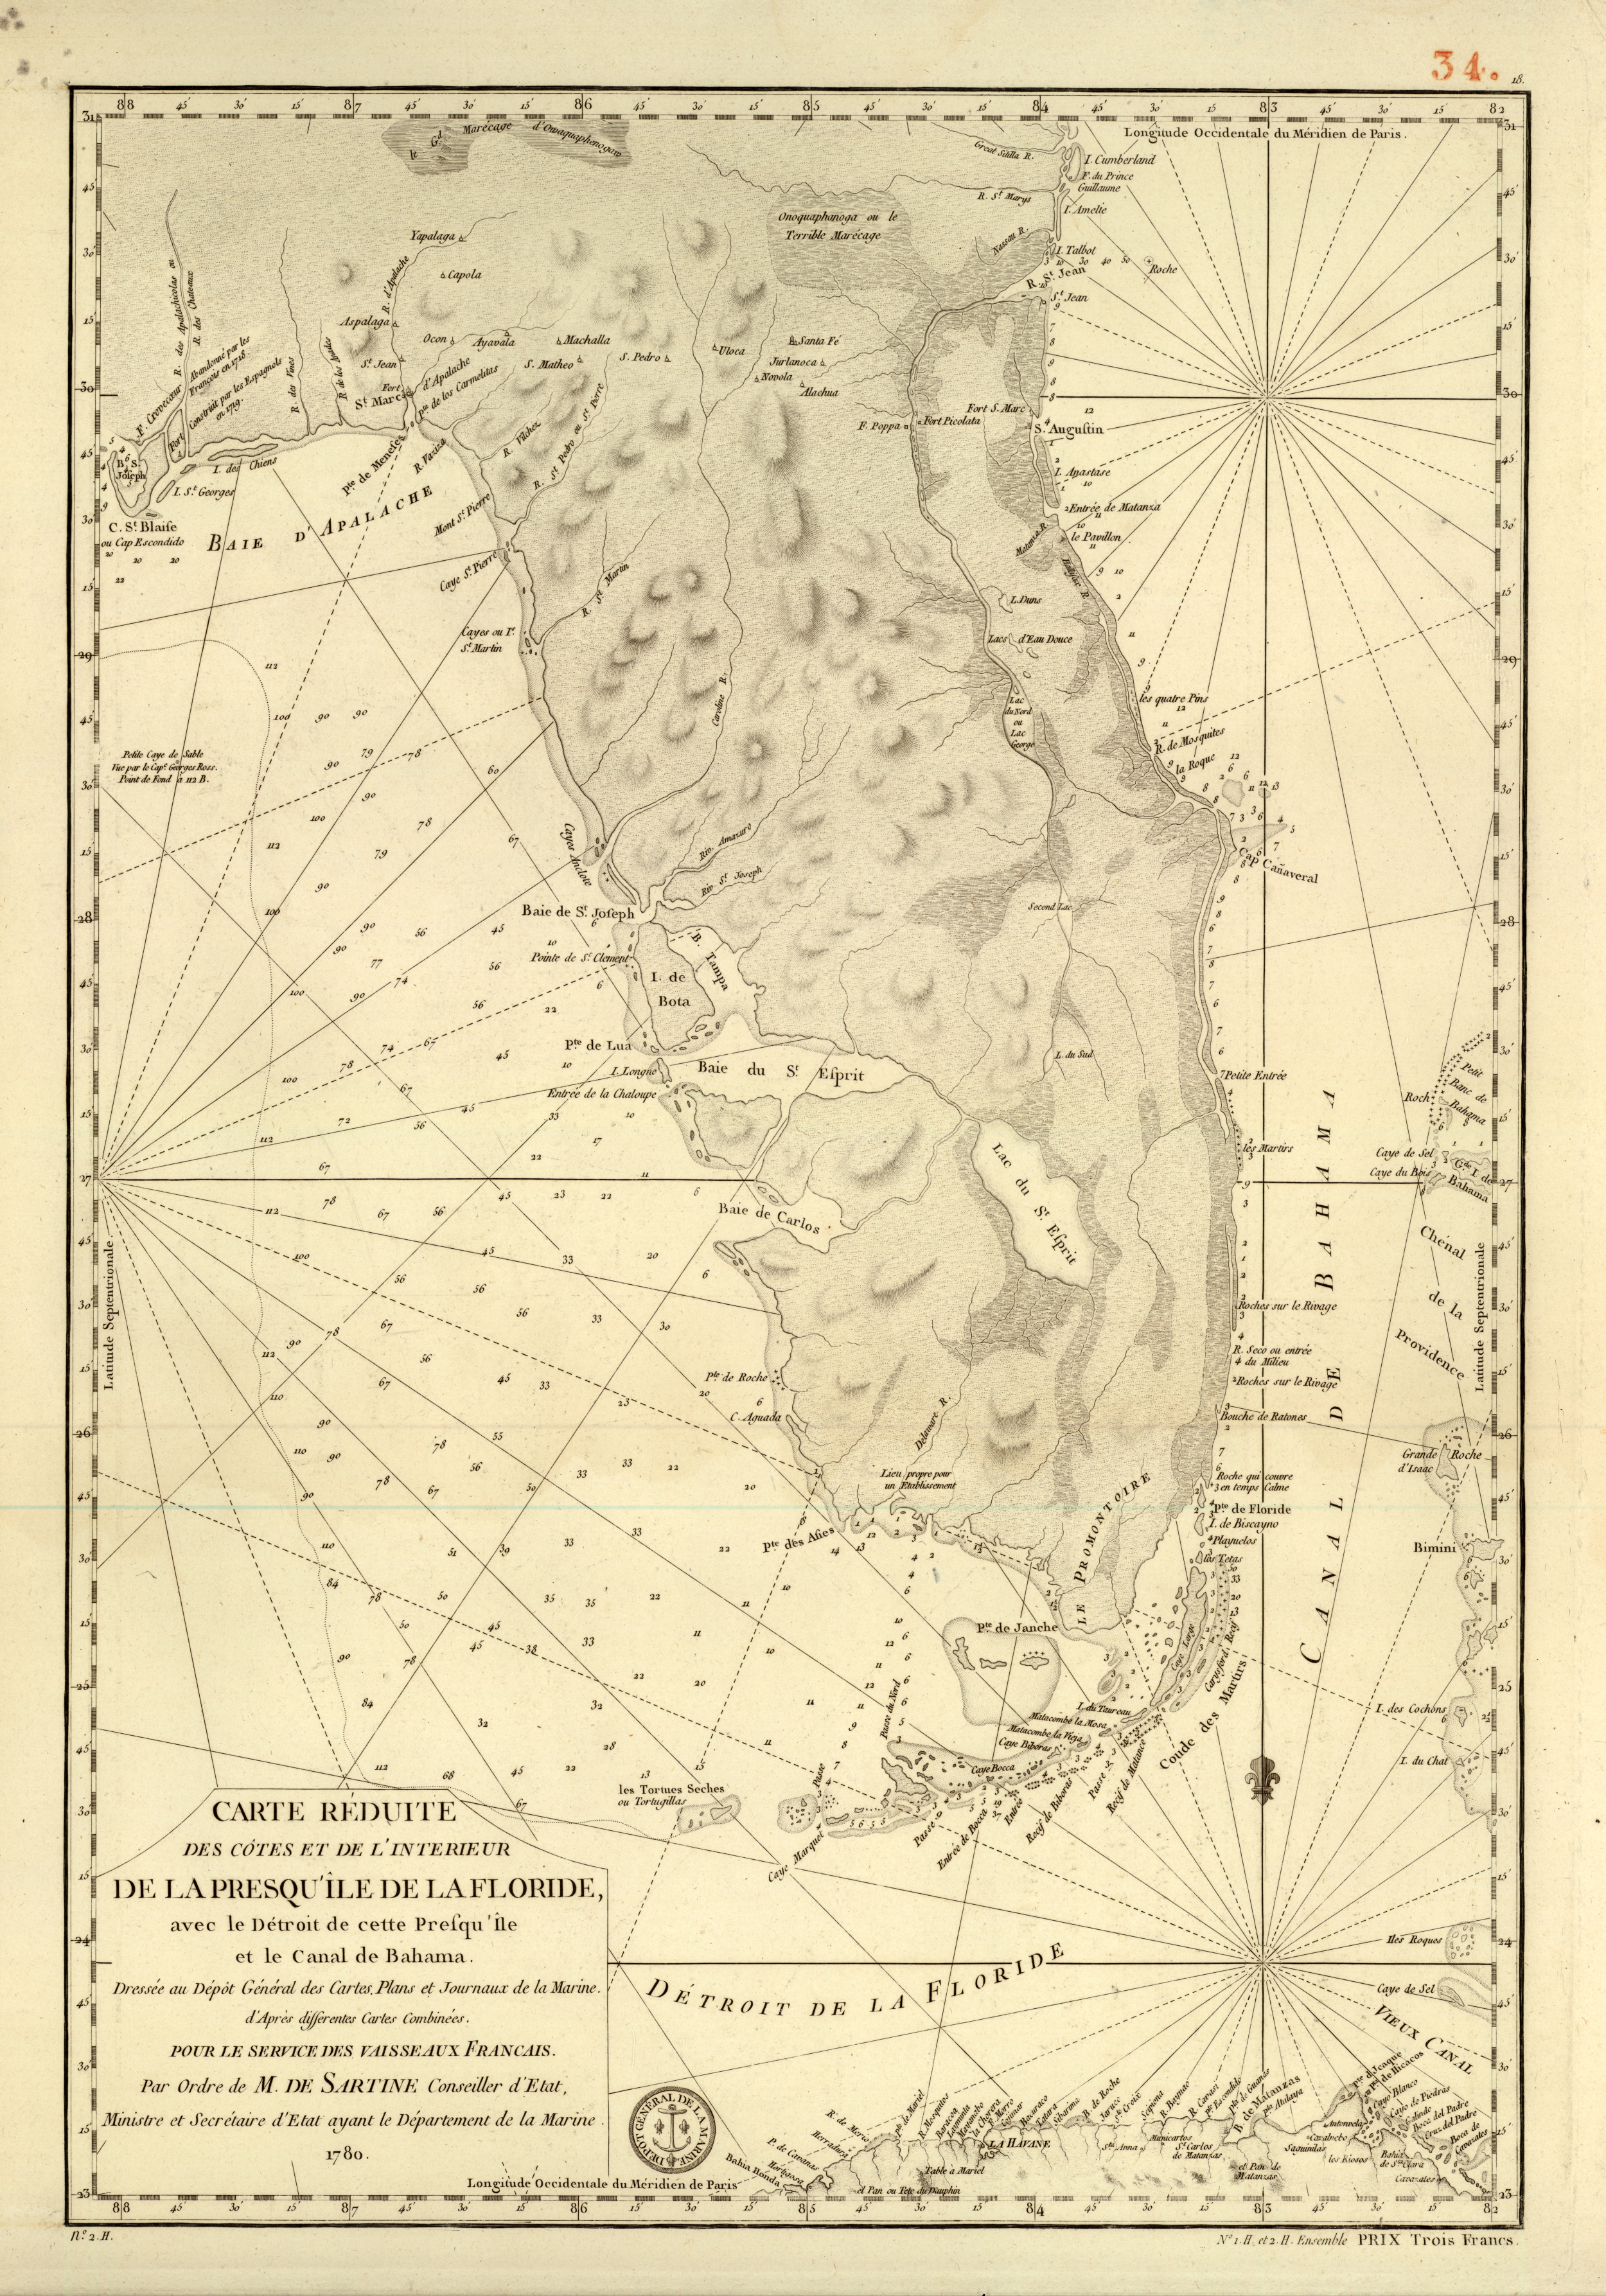 Nautical Chart of the Peninsula of Florida, 1780